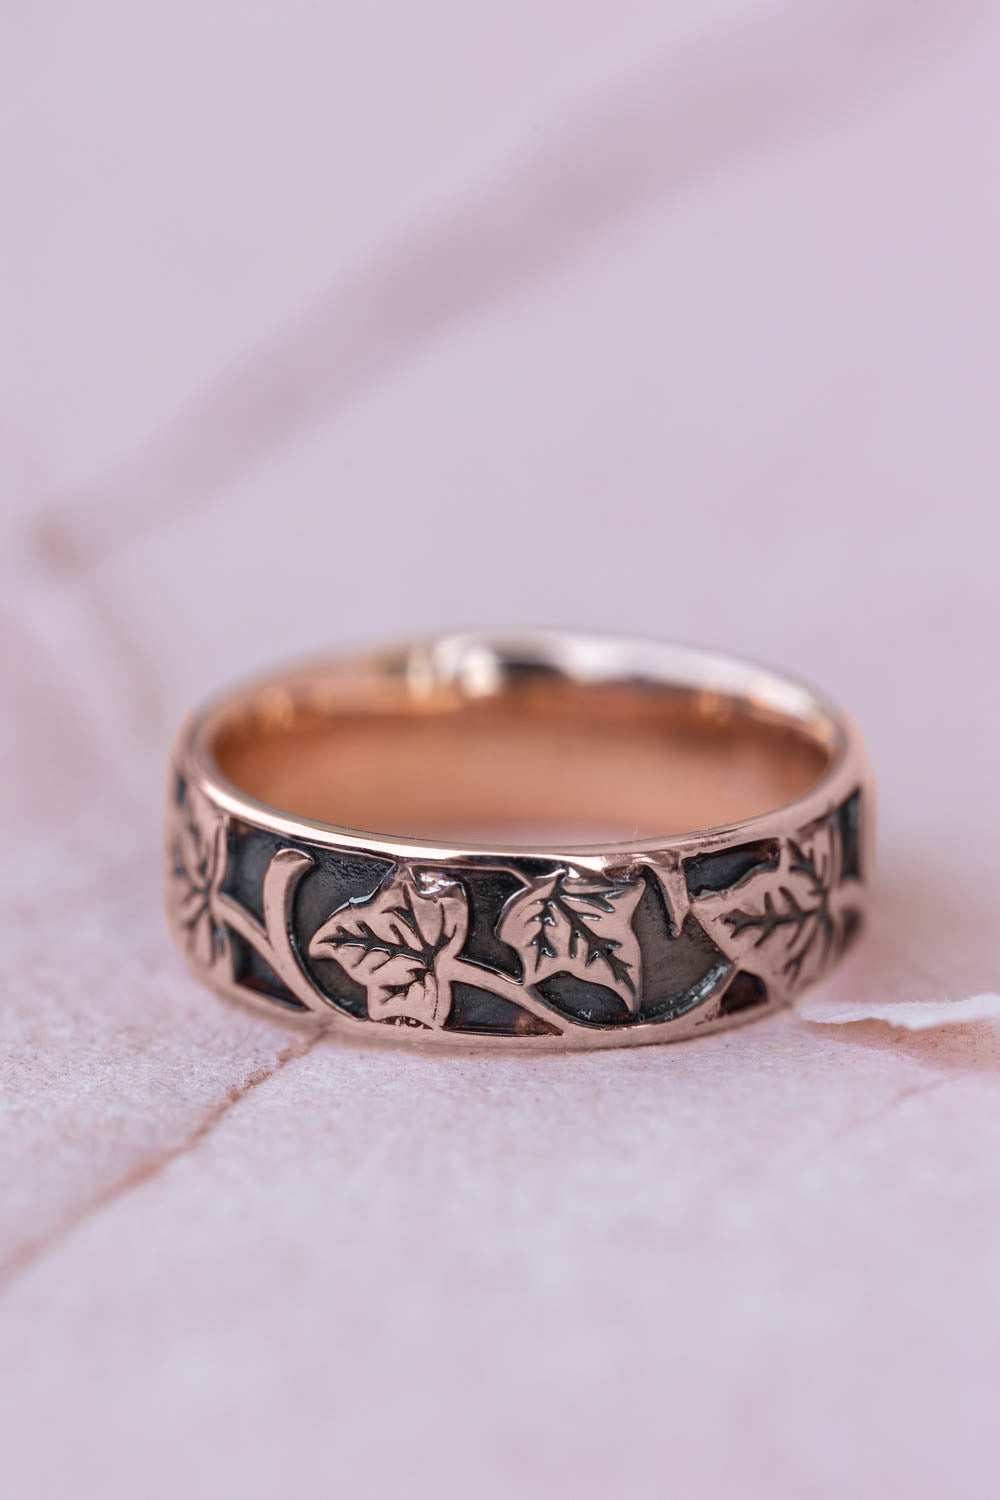 Wedding Rings : Etched Leaf Design Wedding Band Ring in 14K ...